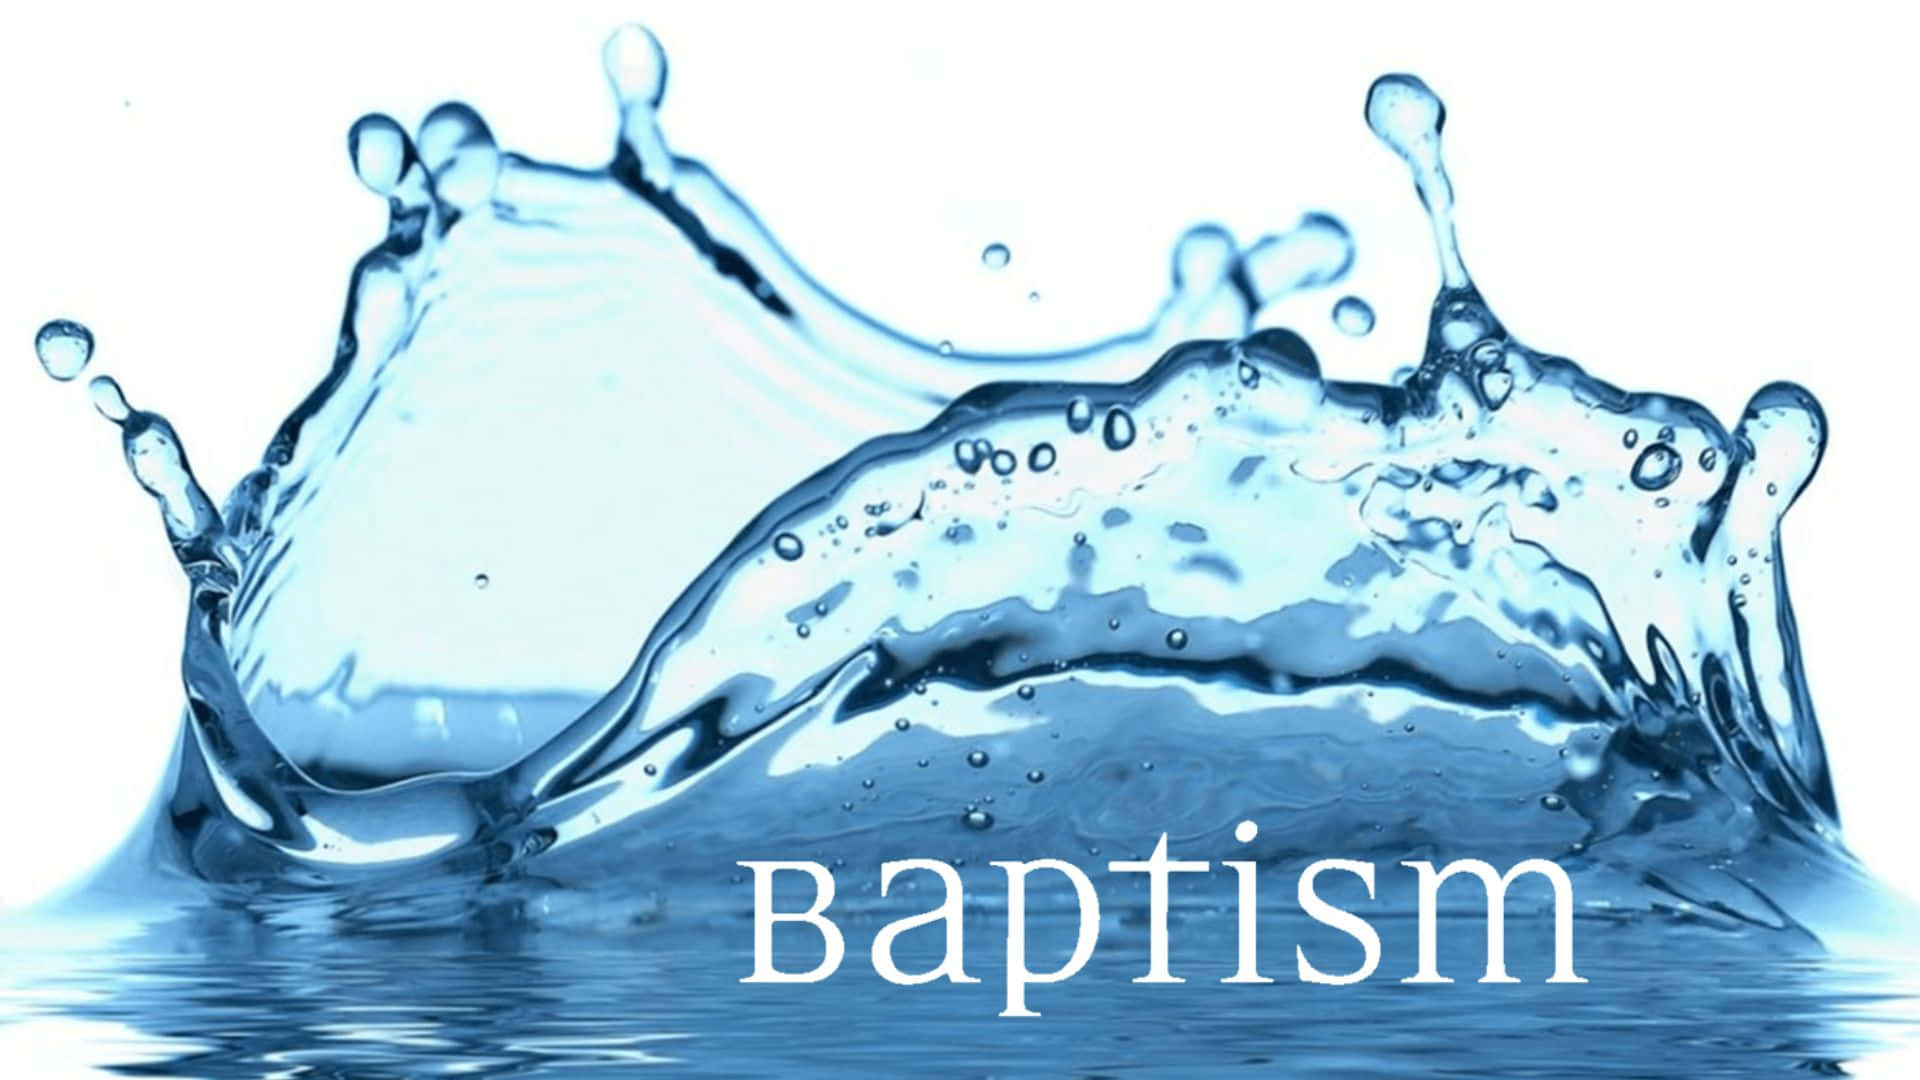 Baptism Background Water Splash